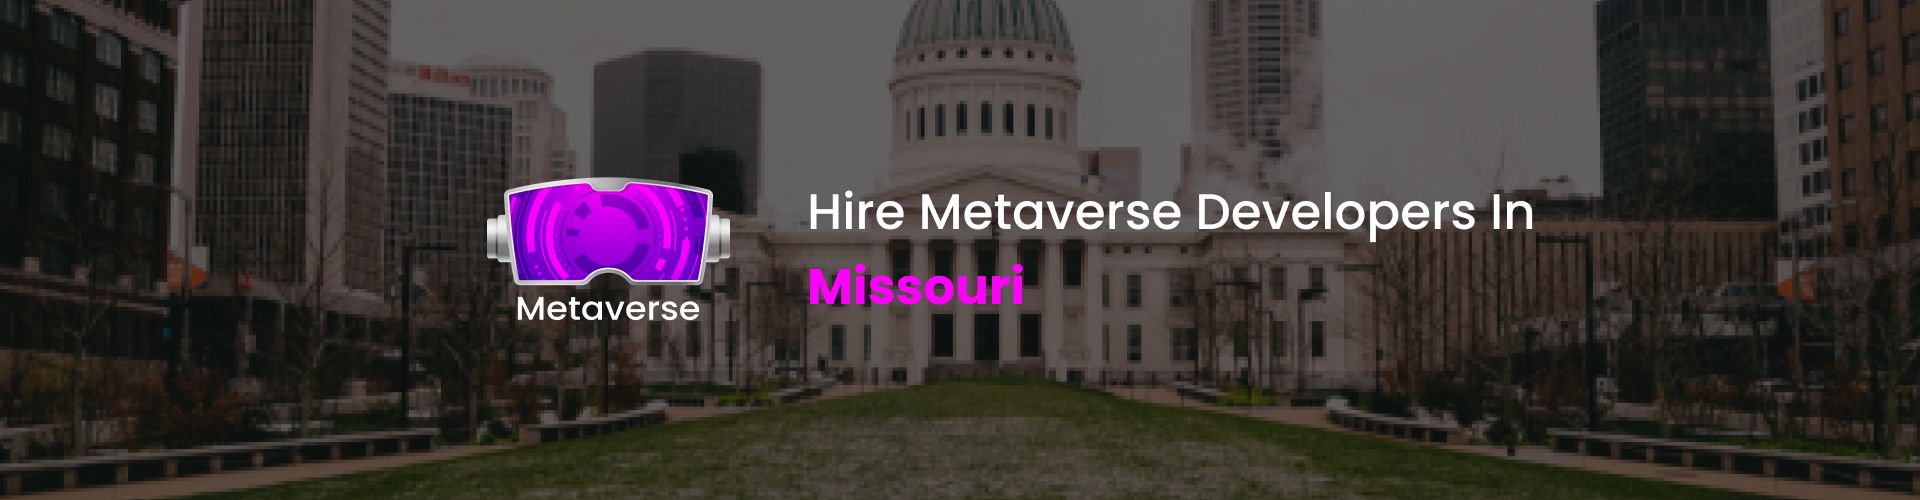 hire metaverse developers in missouri